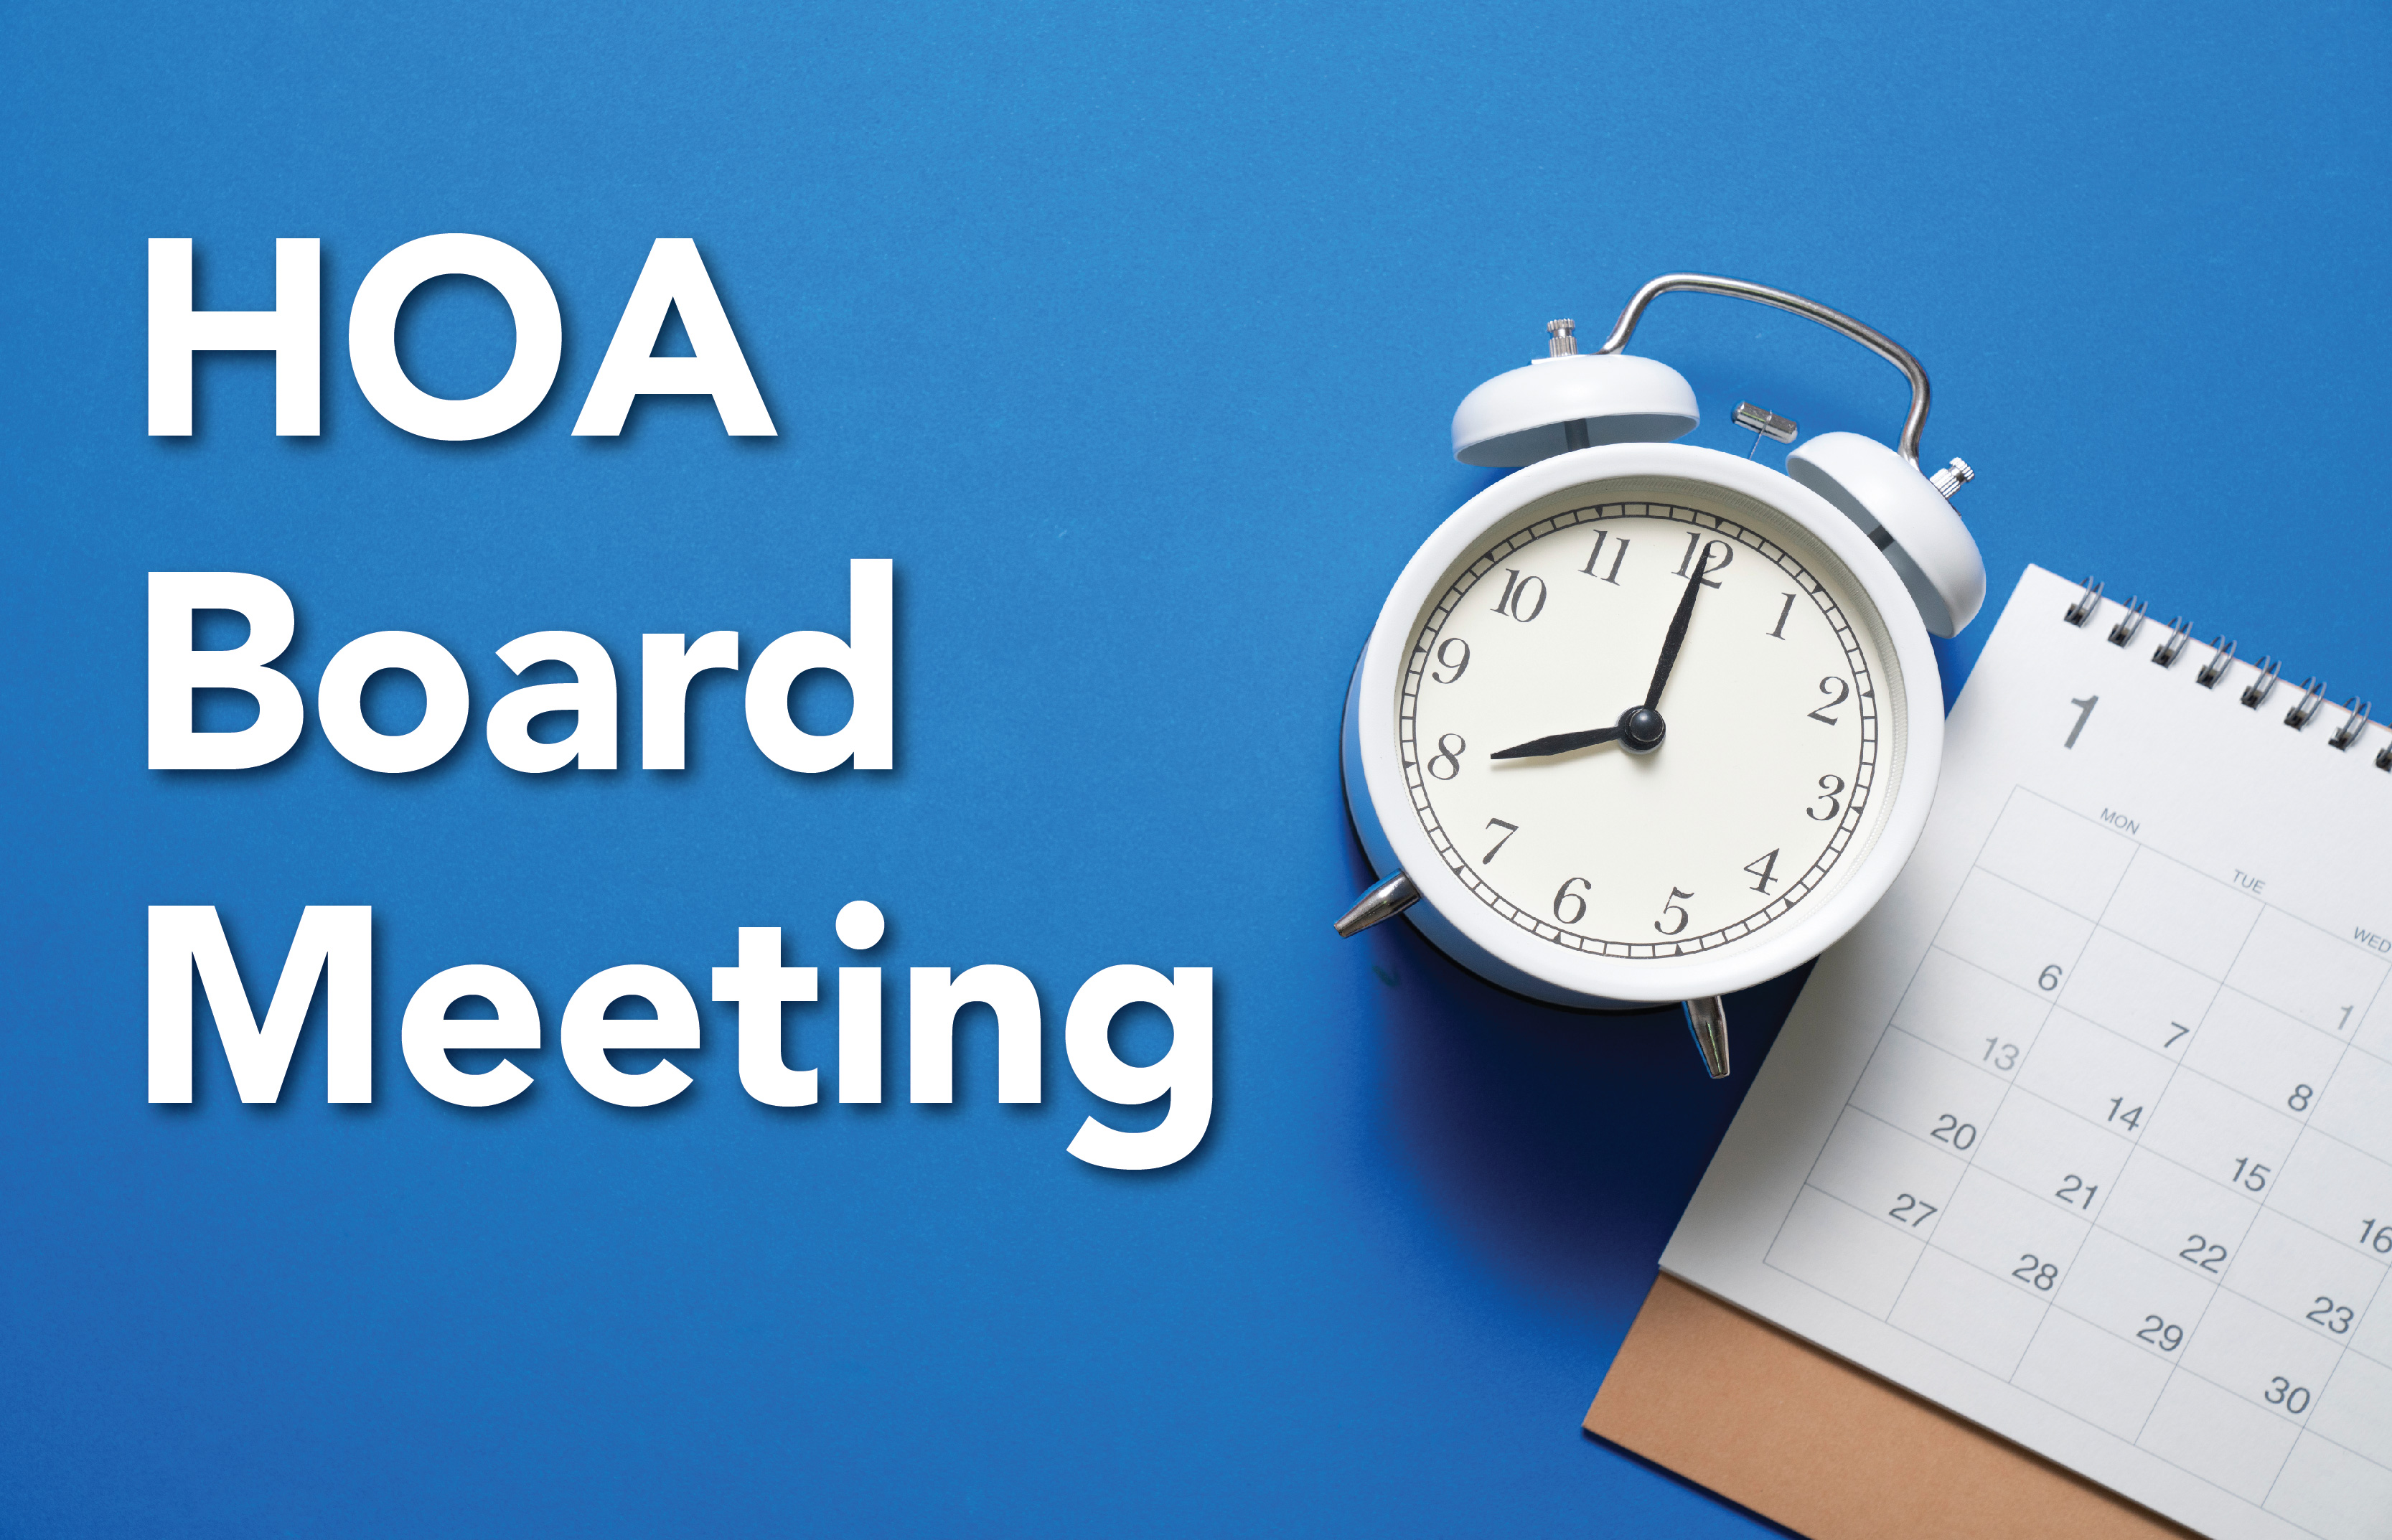 West Memorial HOA Board Meeting Set for February 27